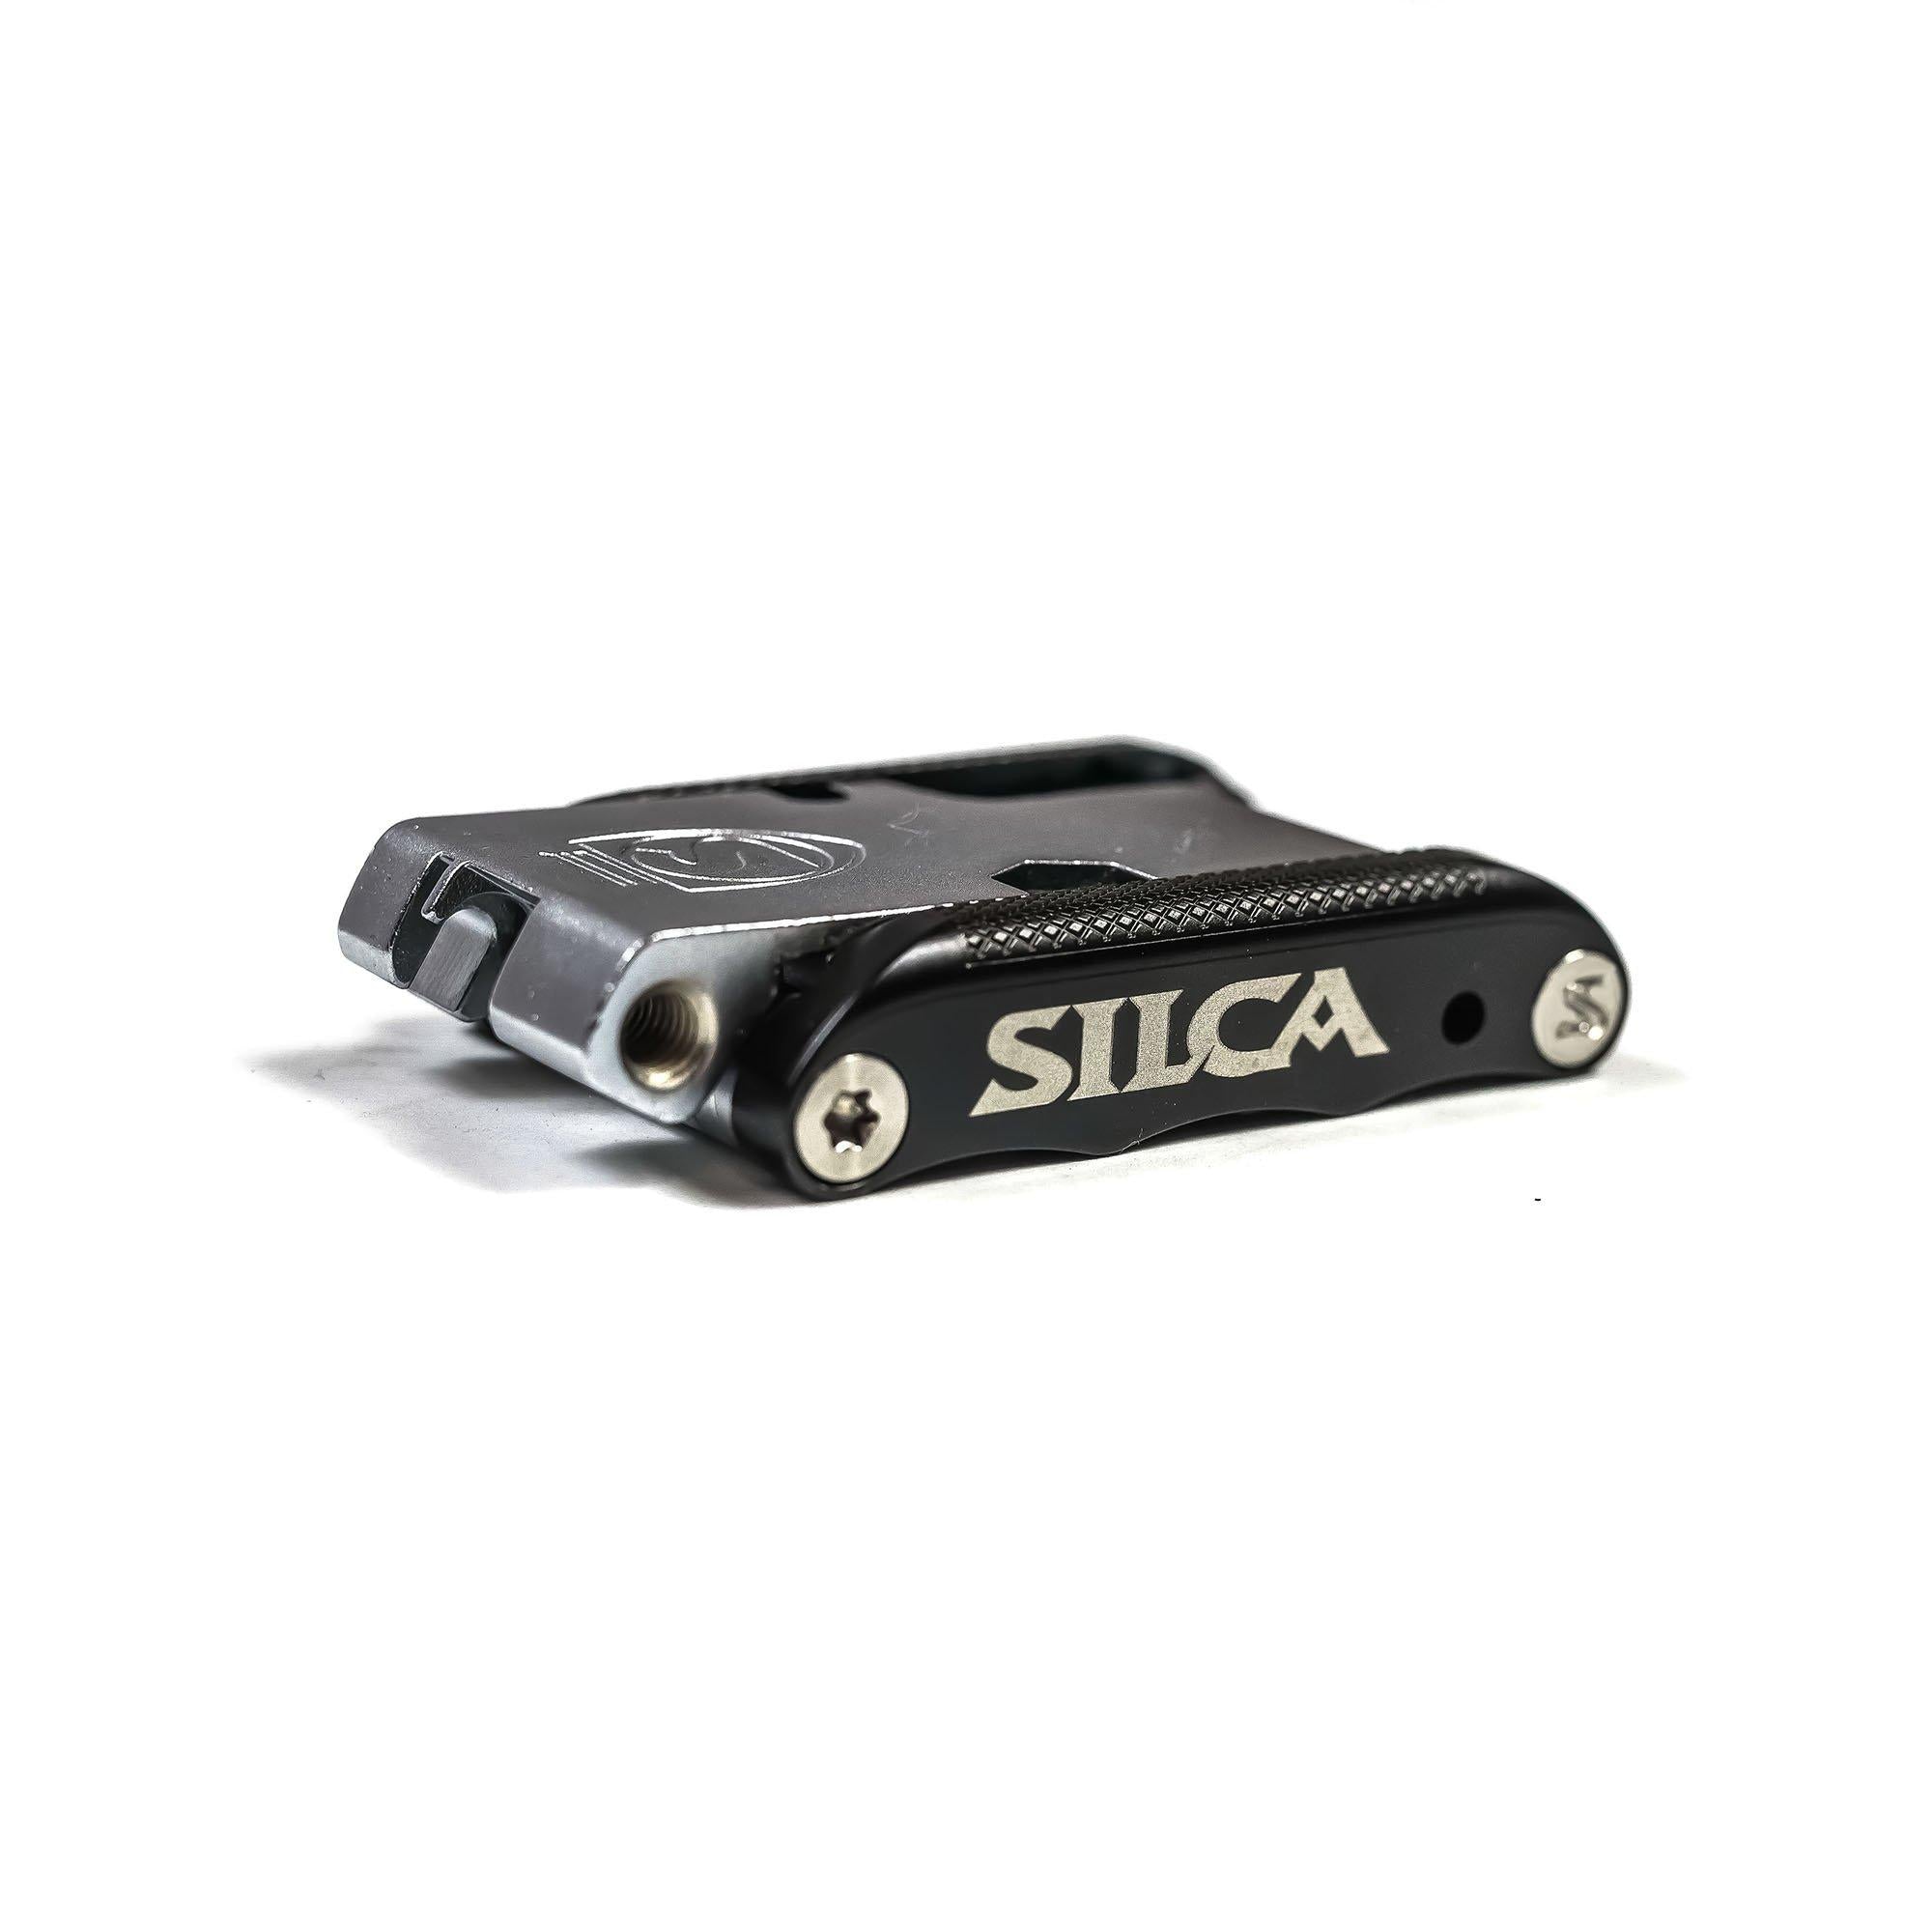 silca-italian-army-knife-venti-20-function